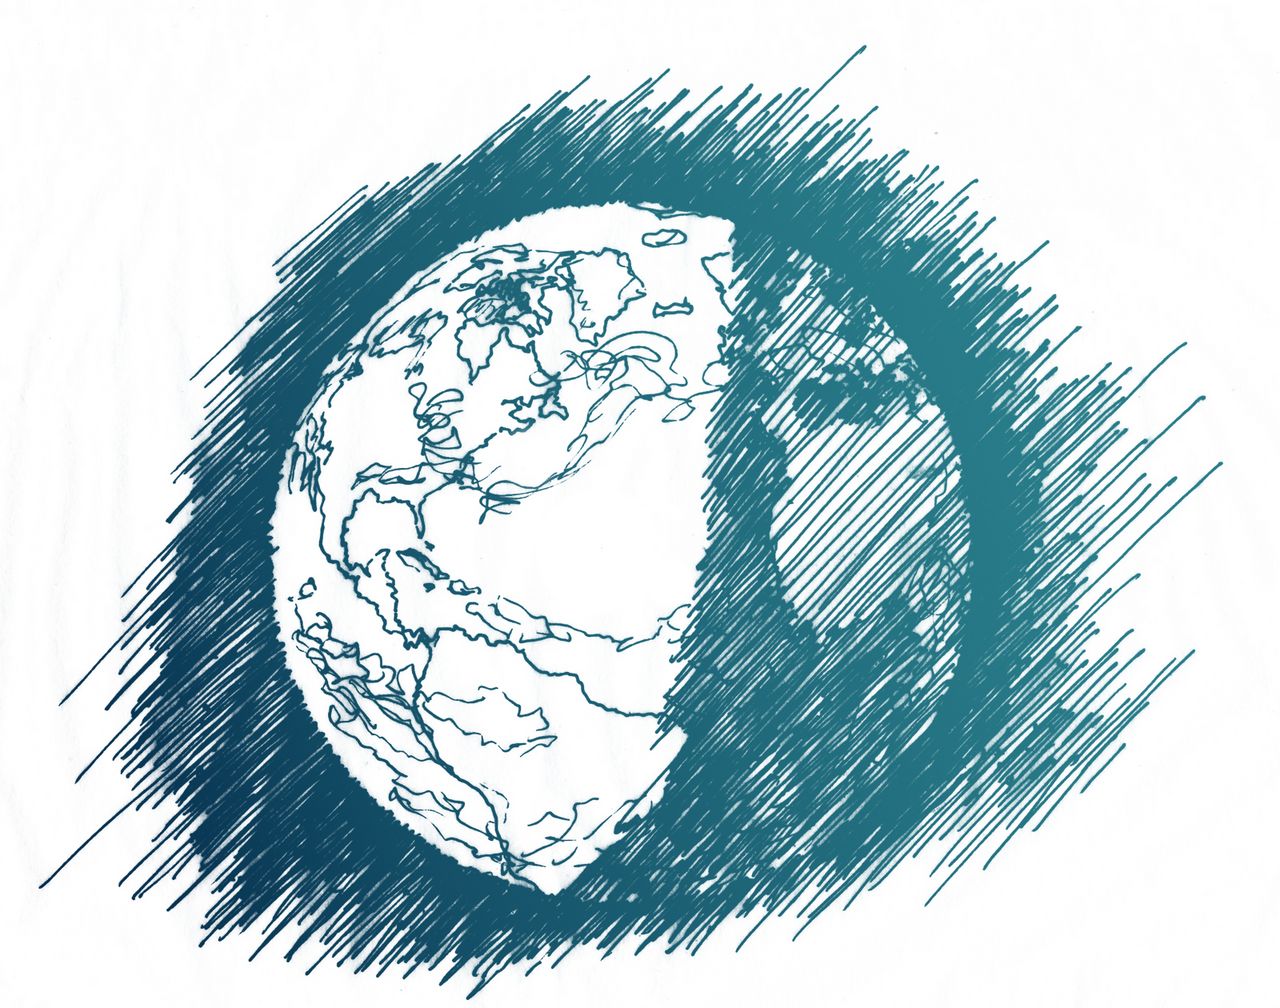 Hand drawn illustration of the world globe.